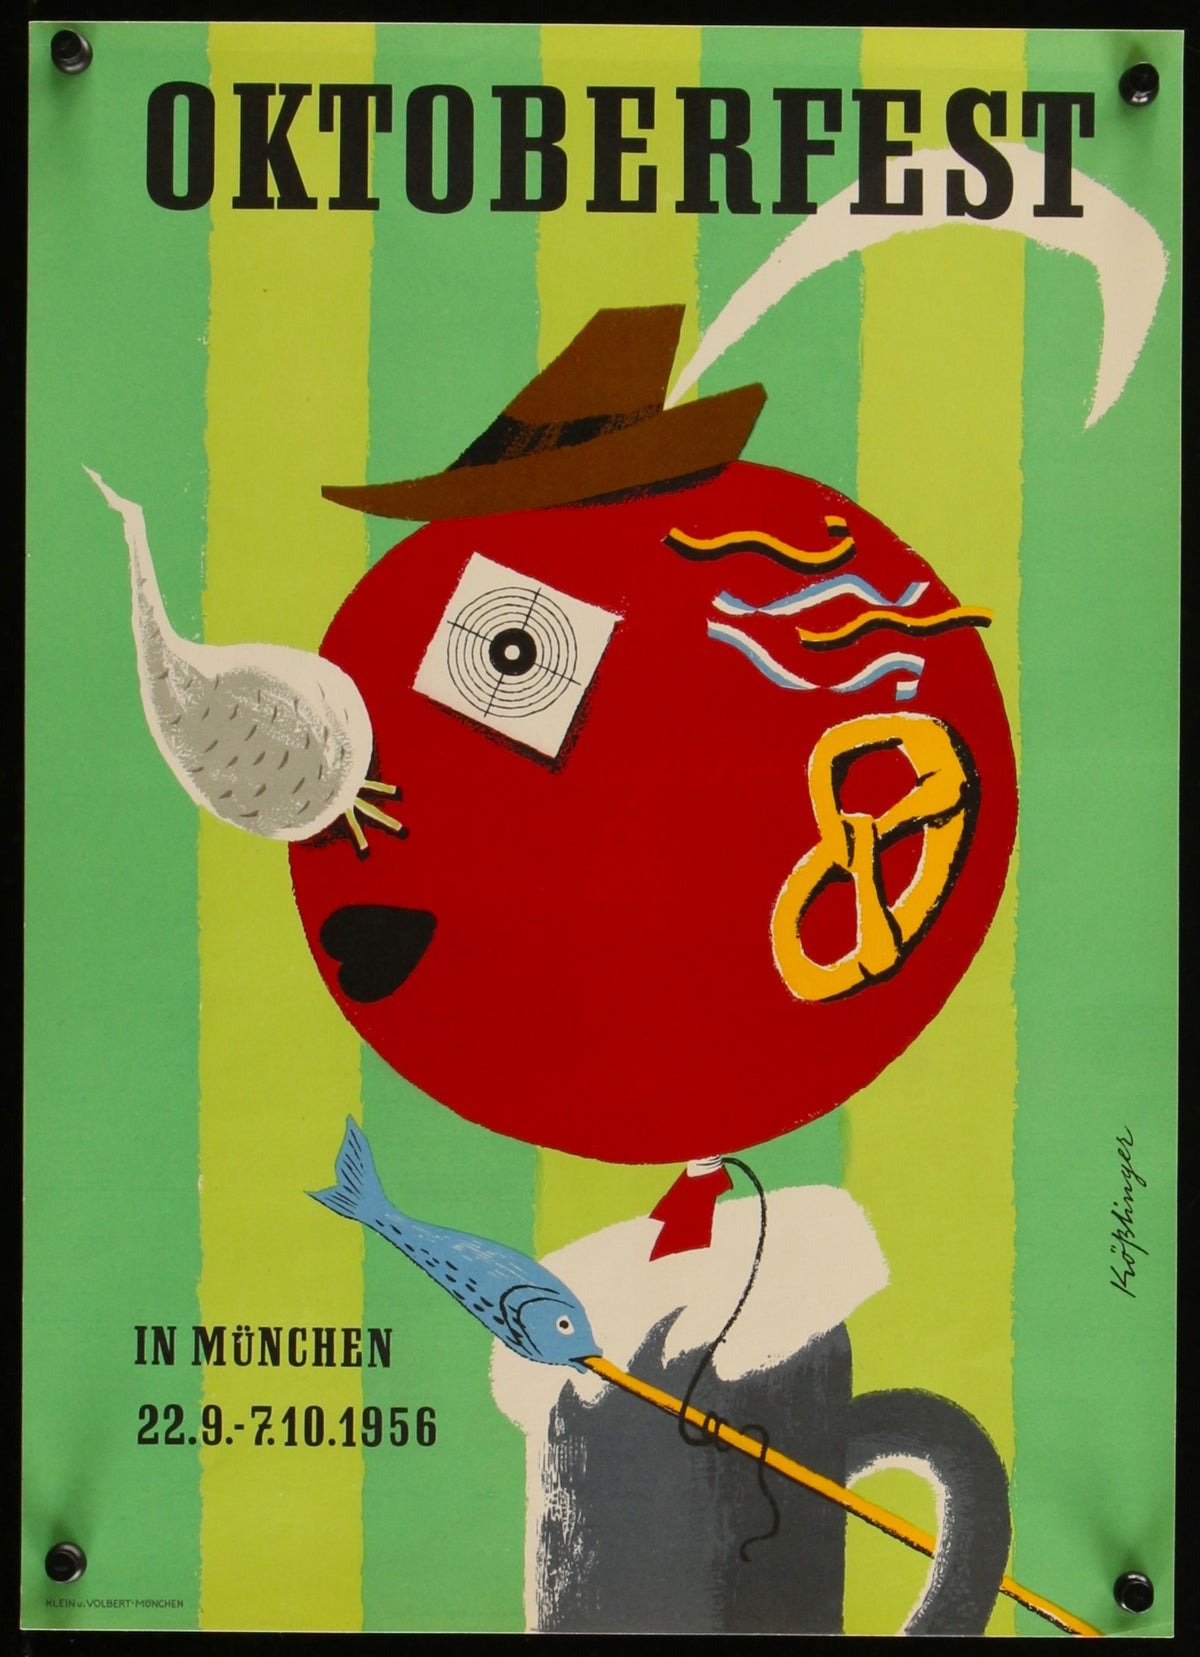 Oktoberfest - Authentic Vintage Poster